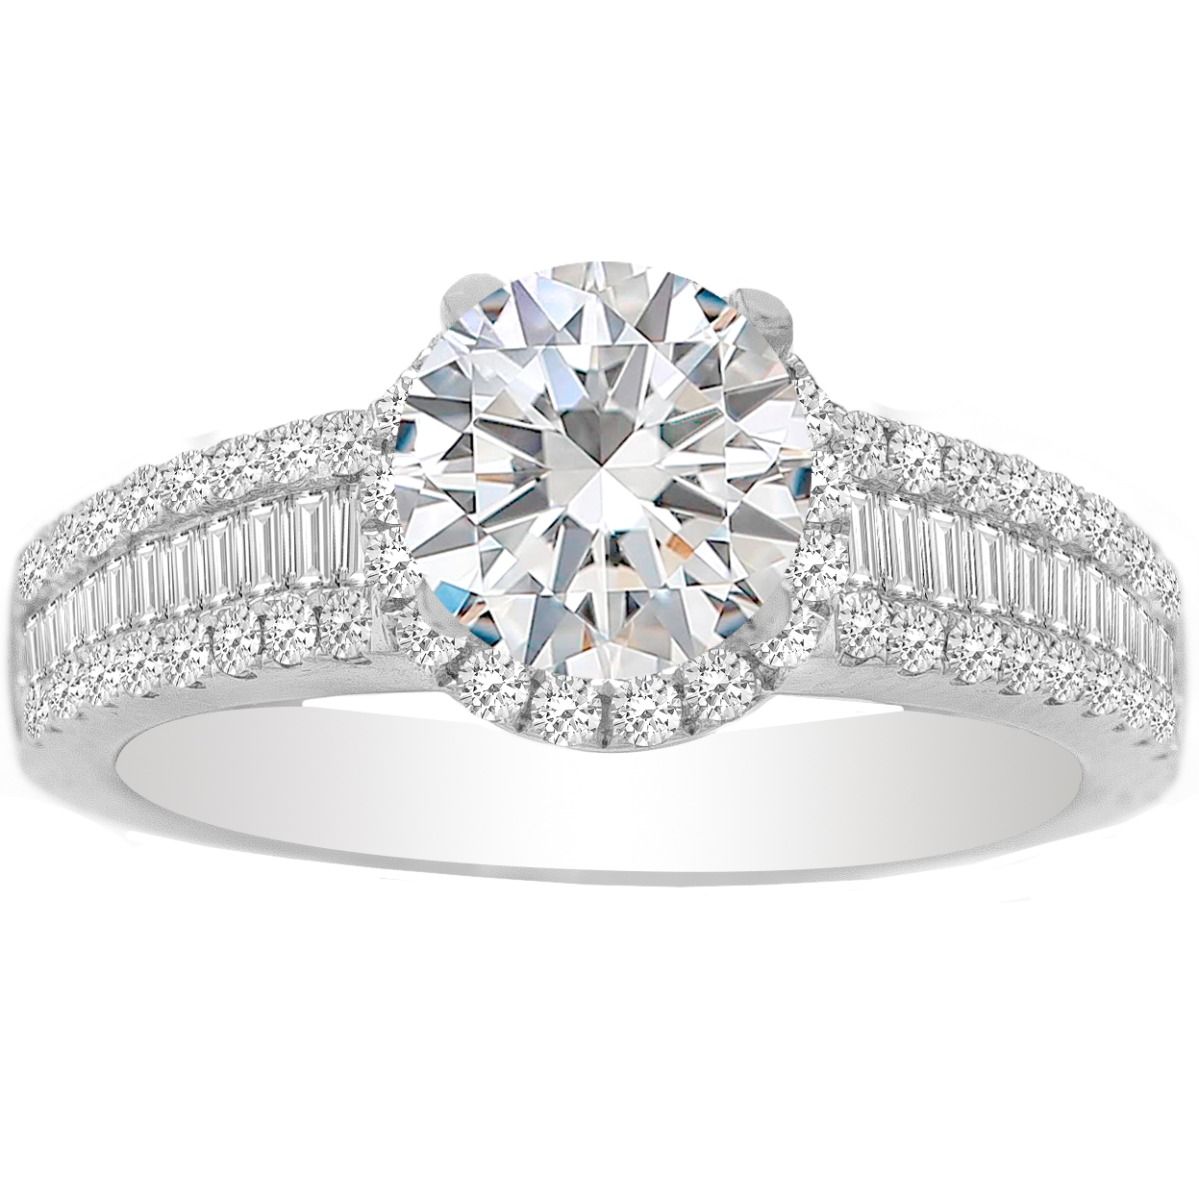 Janina Diamond Baguette Engagement Ring In 14K White Gold; 1.22 Ctw